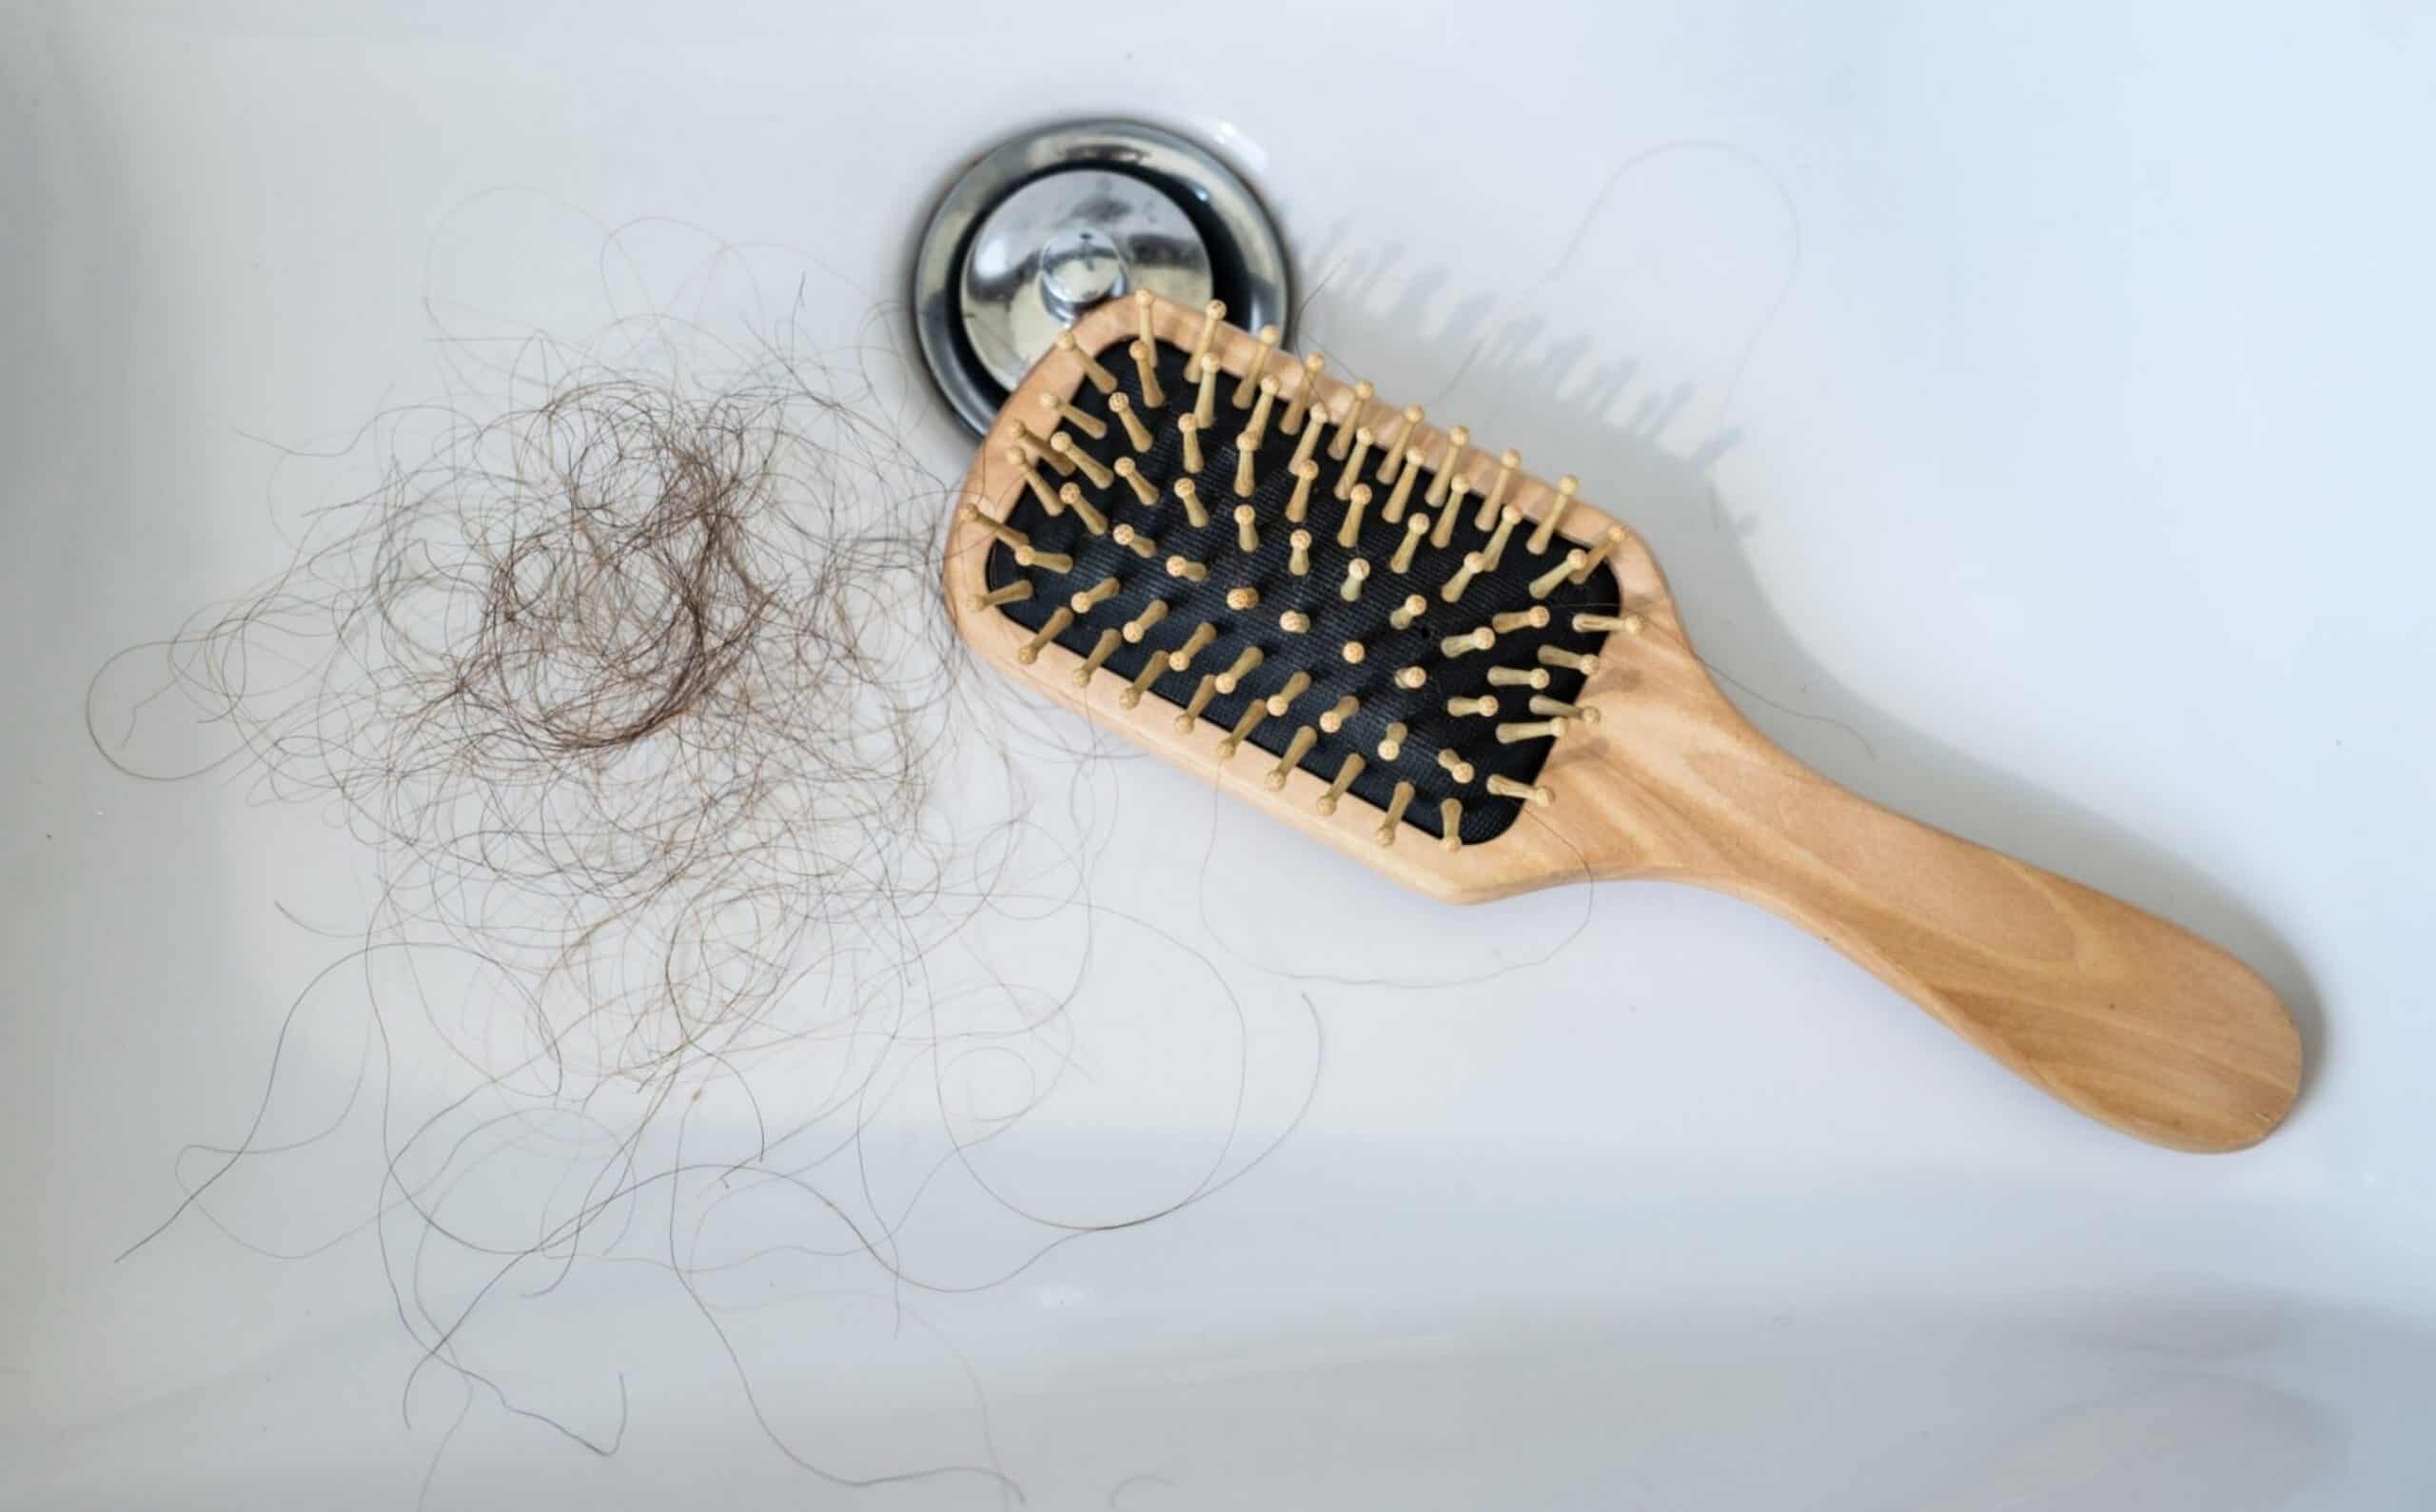 how to clean hair brushes hairbrush in bathroom sink